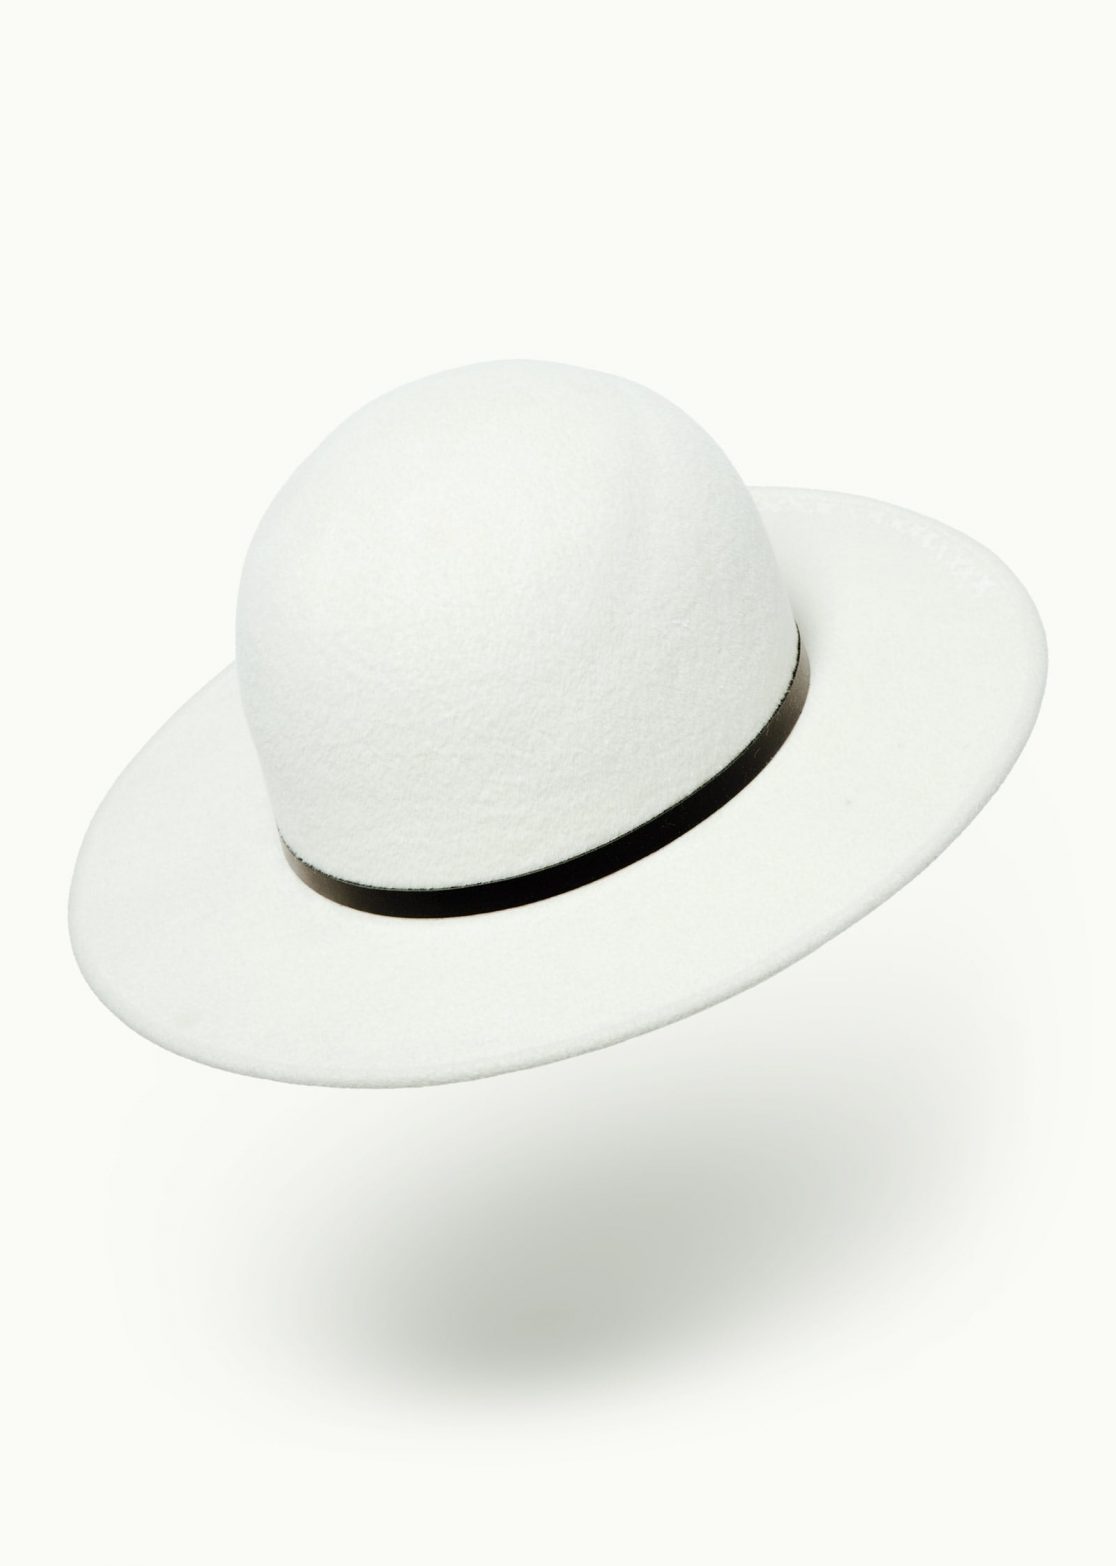 Hats - Women - Unisex - Men - Sphere Off White Image Primary